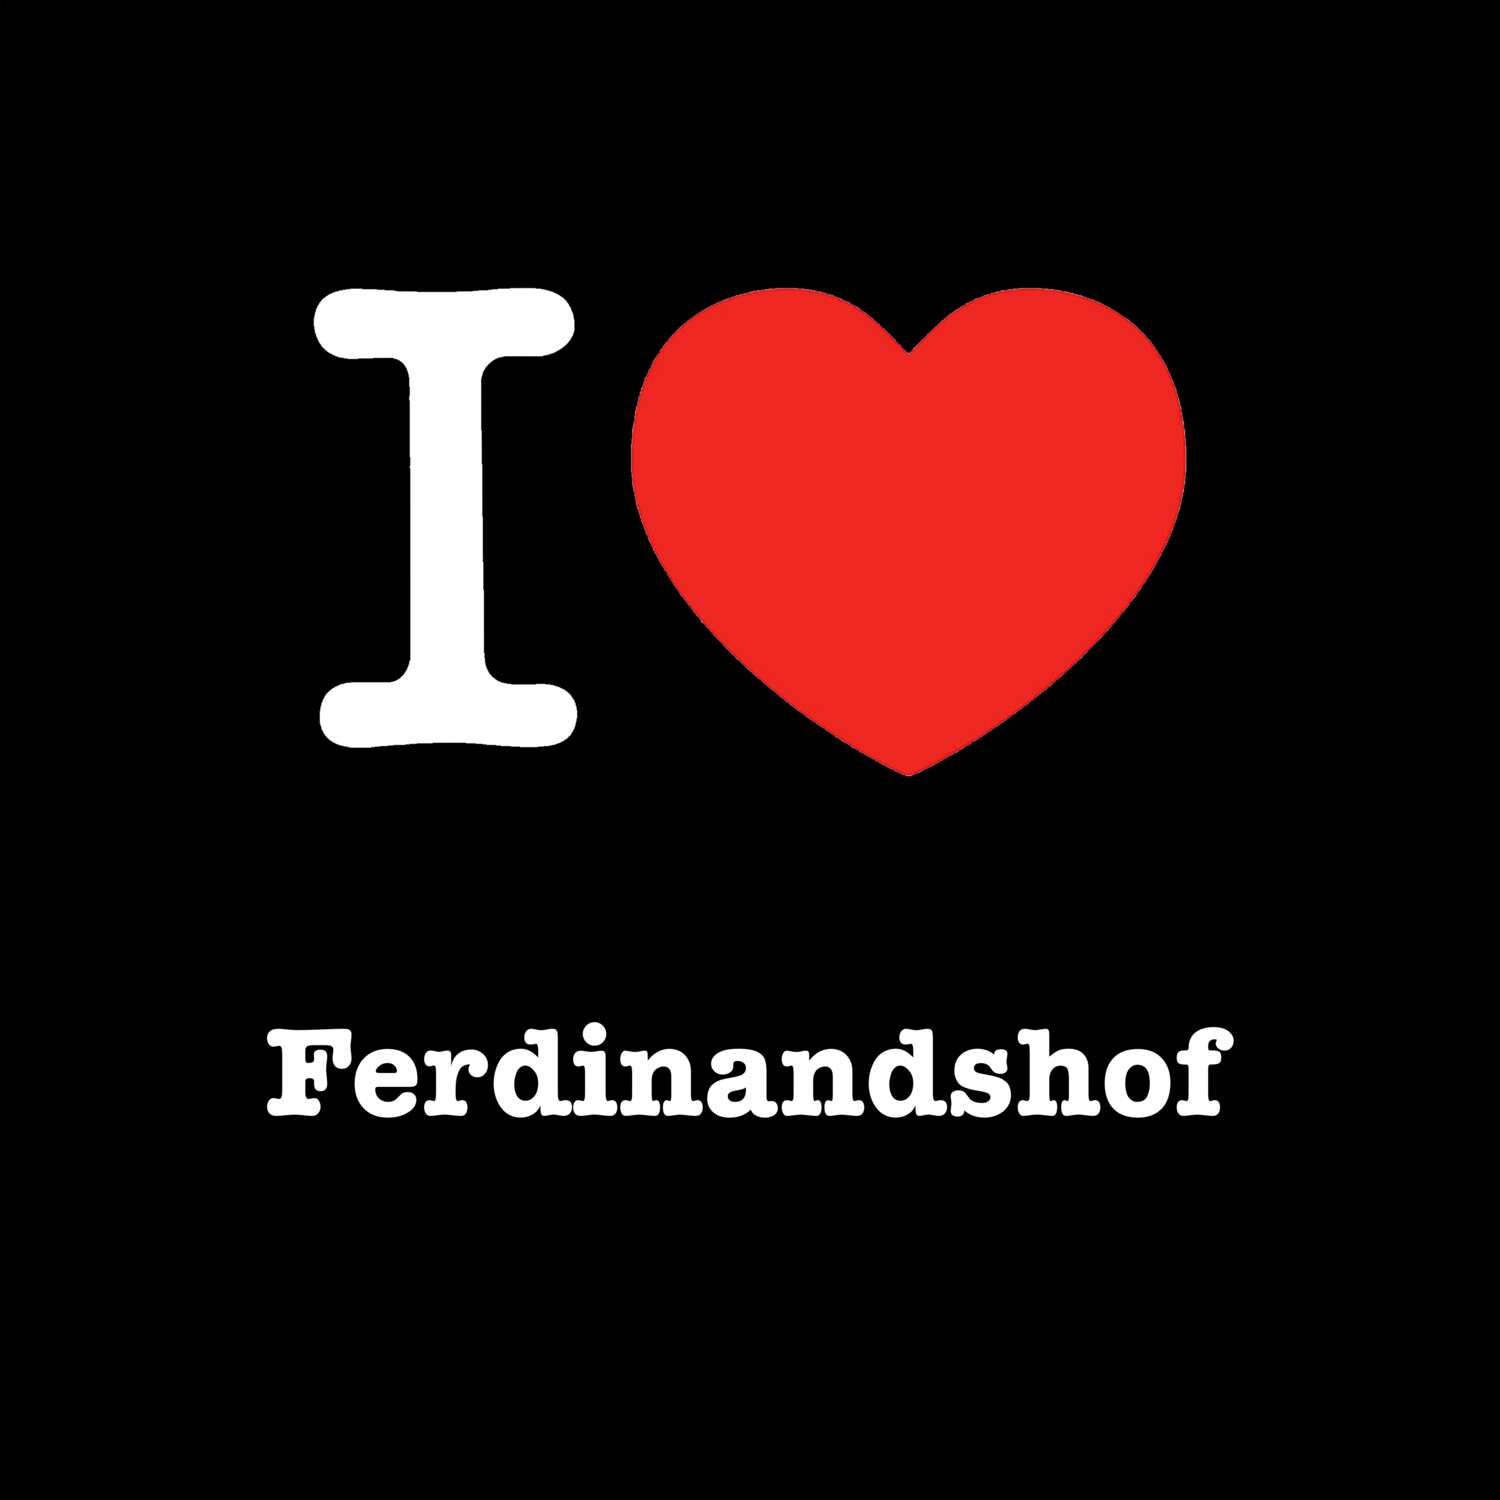 Ferdinandshof T-Shirt »I love«